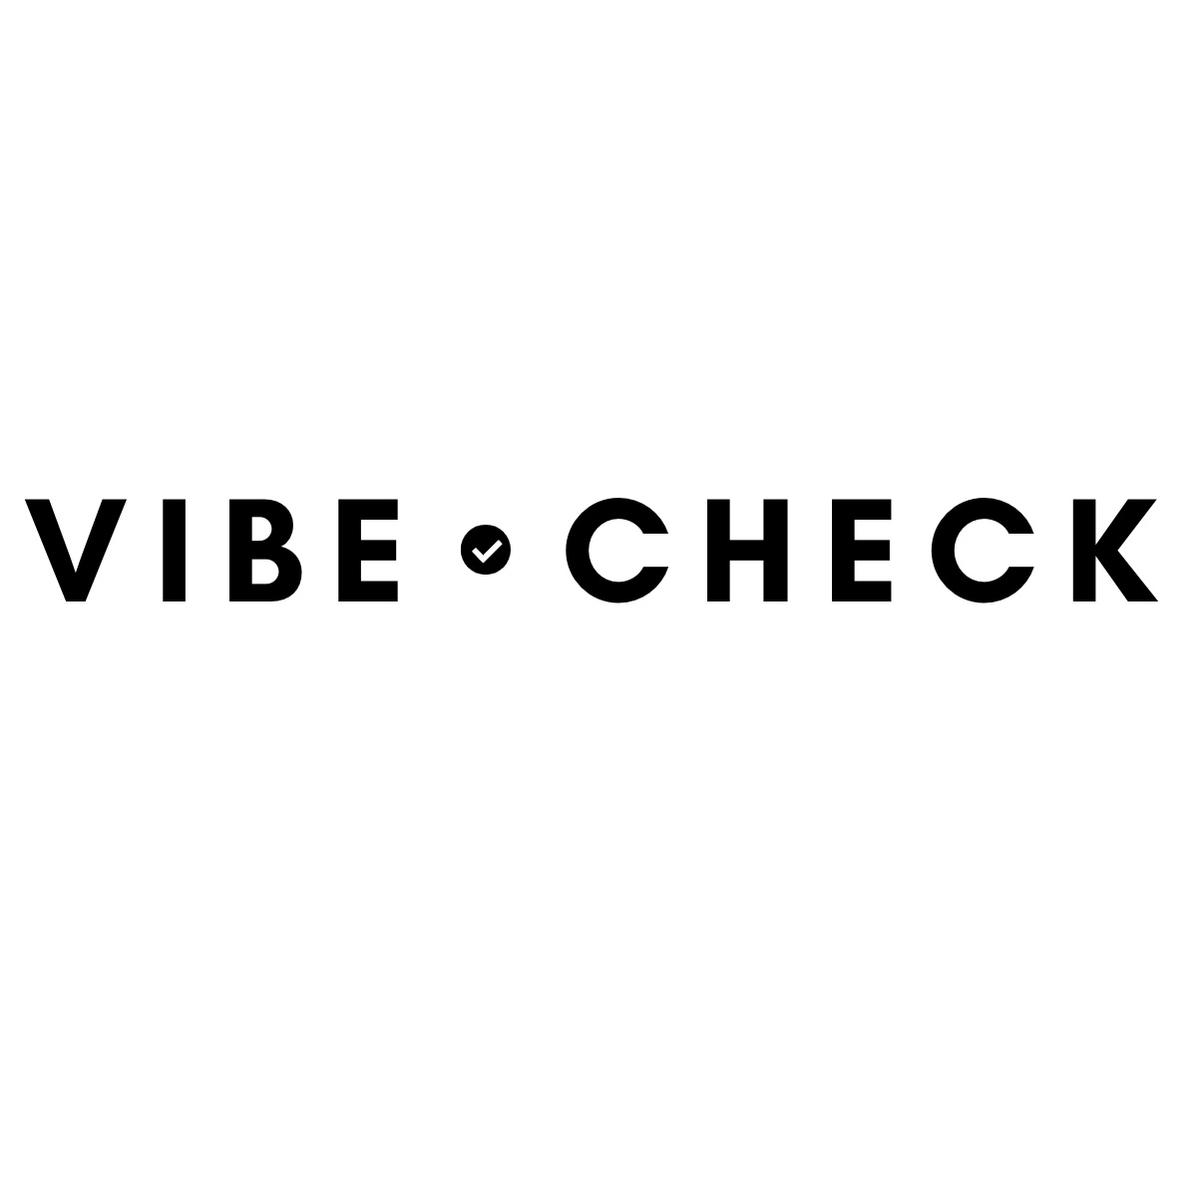 A logo reading Vibe Check with a black checkmark